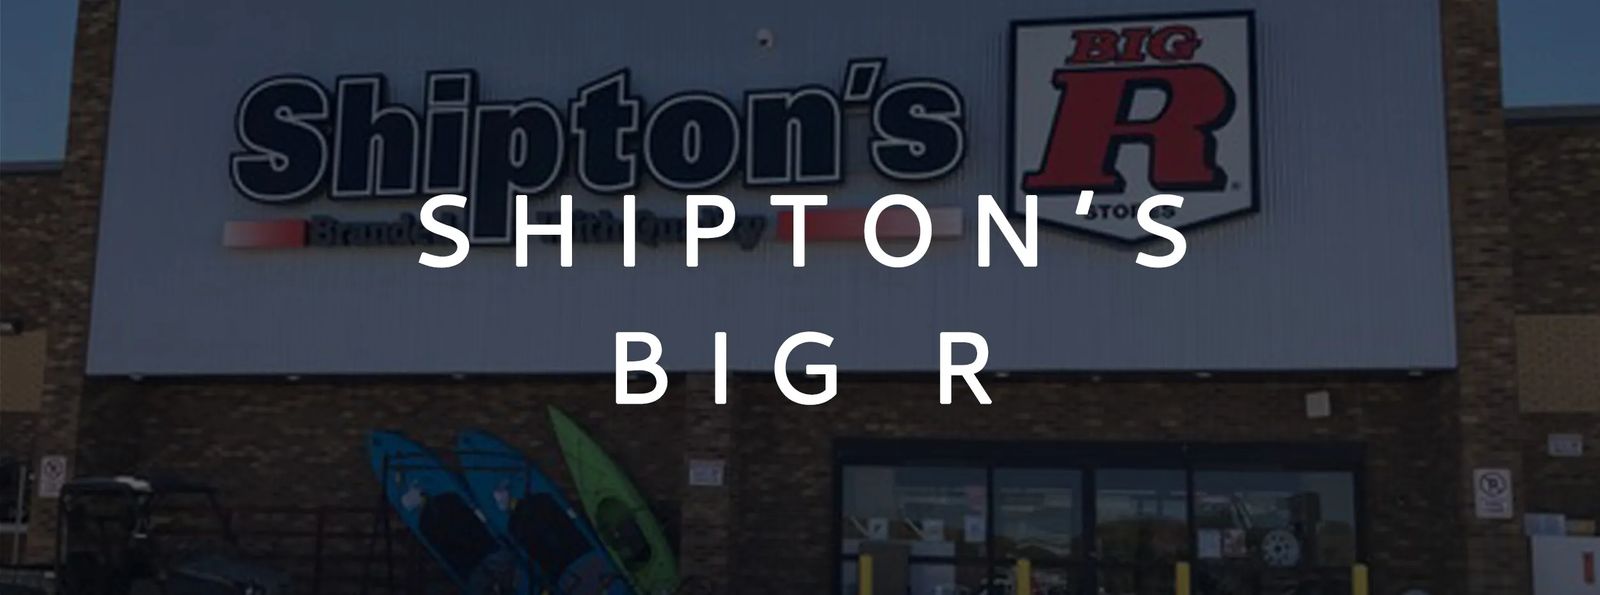 Brand Directory Shipton's Big R